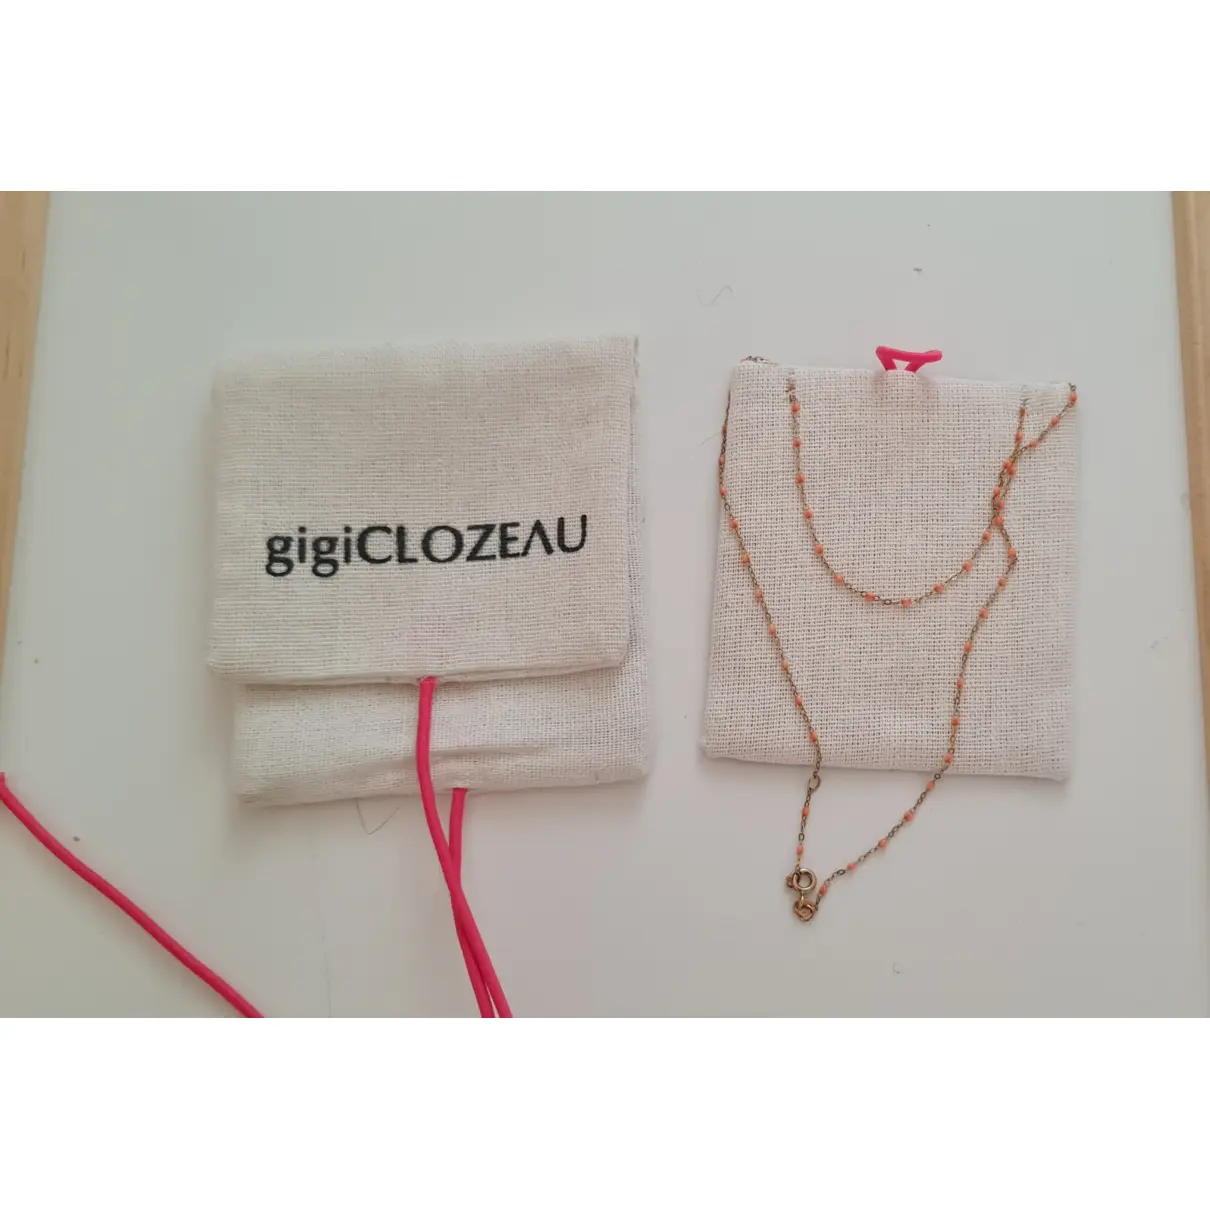 Buy Gigi Clozeau Yellow gold necklace online